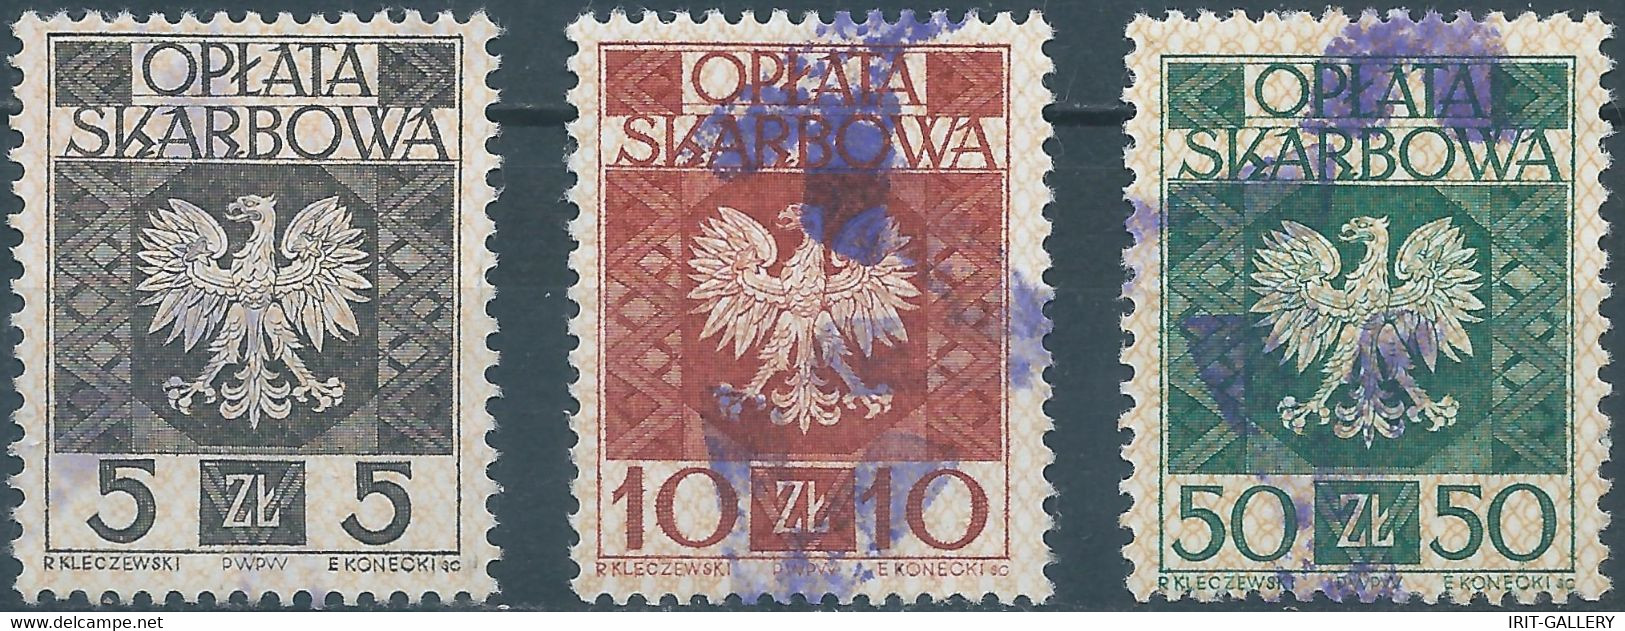 POLONIA-POLAND-POLSKA,1958 Revenue Stamp Fiscal TaX 5-10- 50ZL (OPLATA SKARBOWA) Used - Revenue Stamps